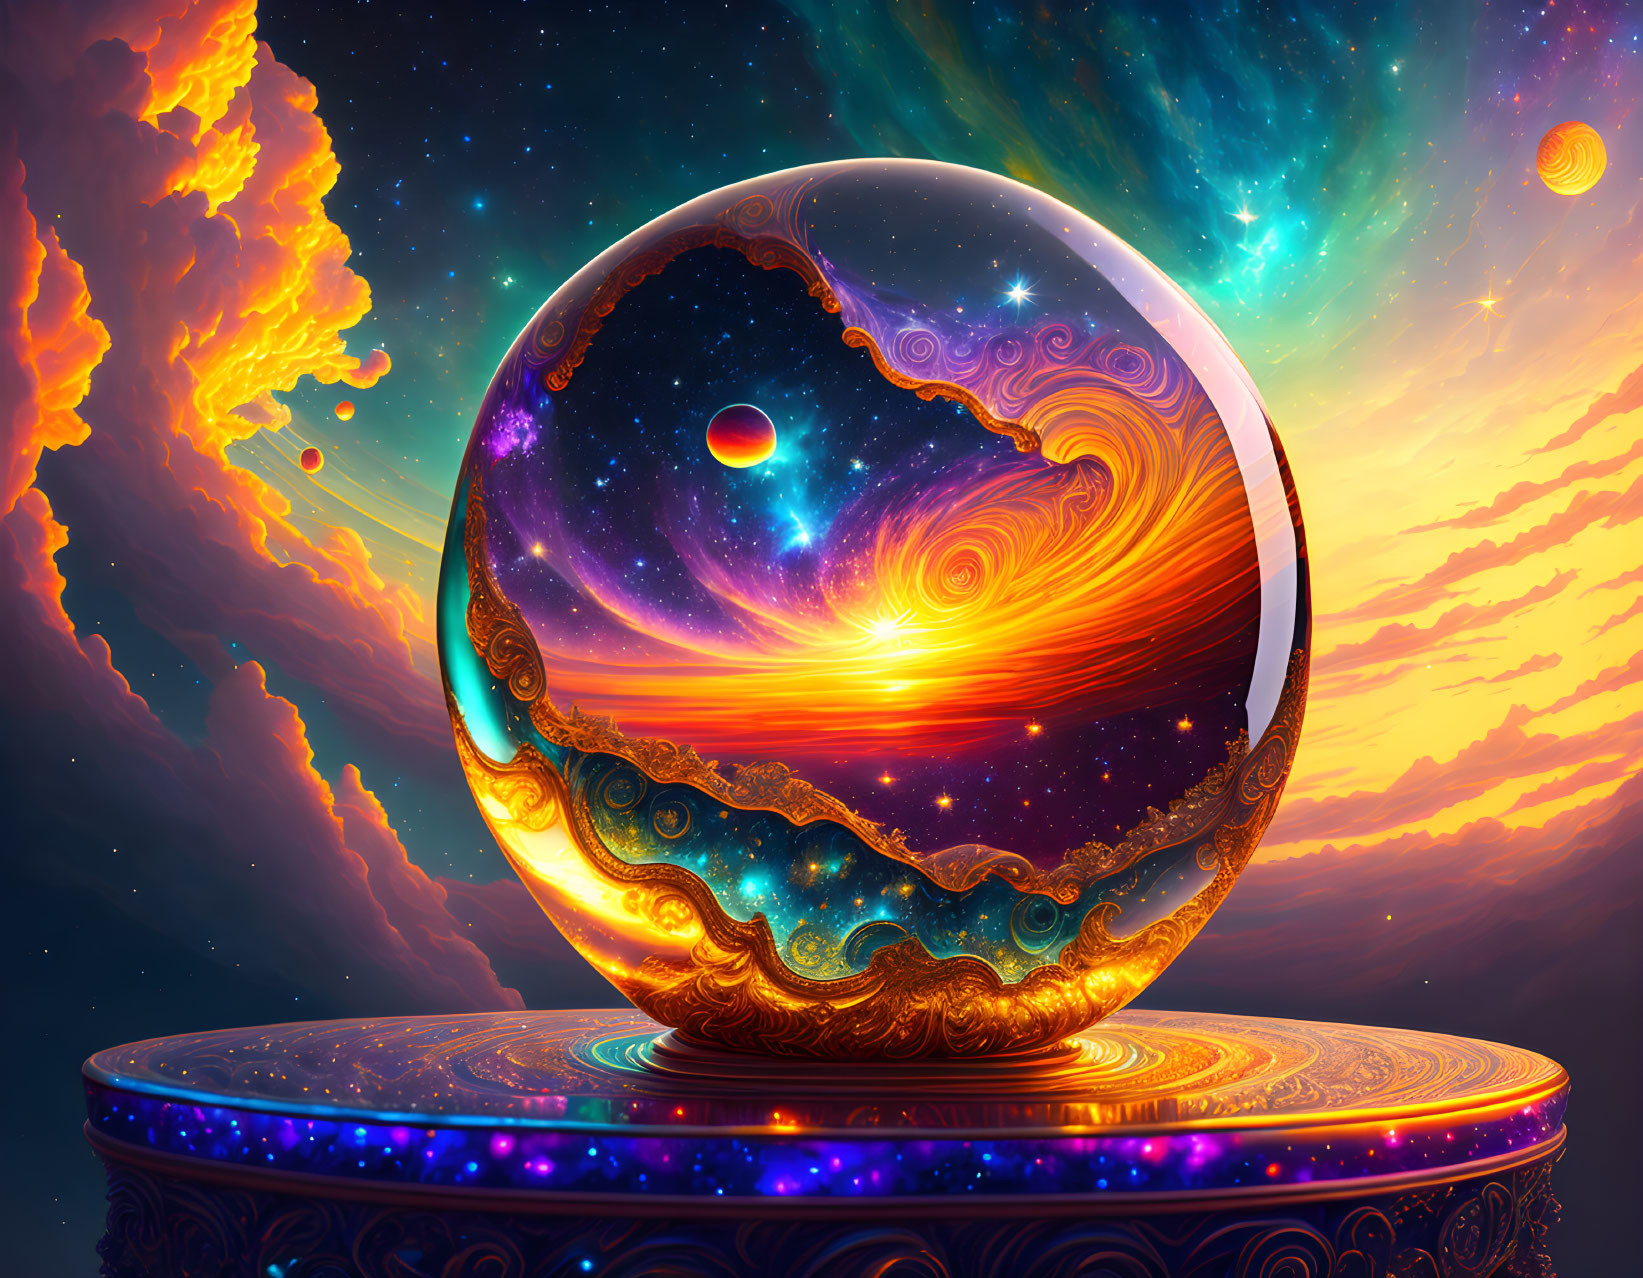 Colorful digital artwork: Swirling patterns on spherical object in celestial sky.